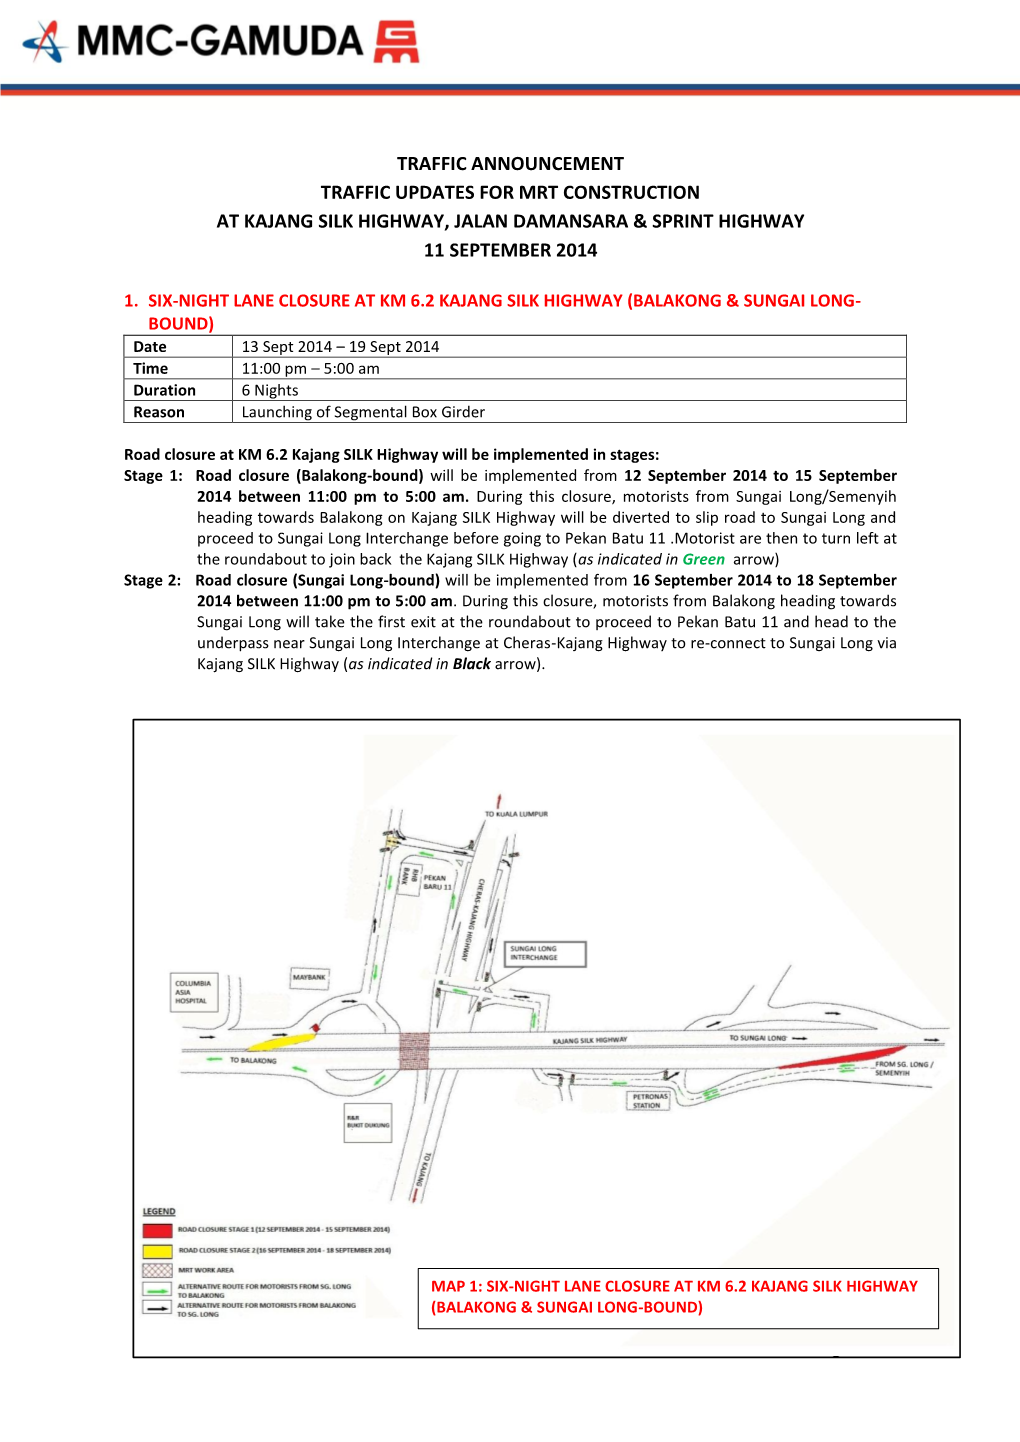 Traffic Announcement Traffic Updates for Mrt Construction at Kajang Silk Highway, Jalan Damansara & Sprint Highway 11 September 2014